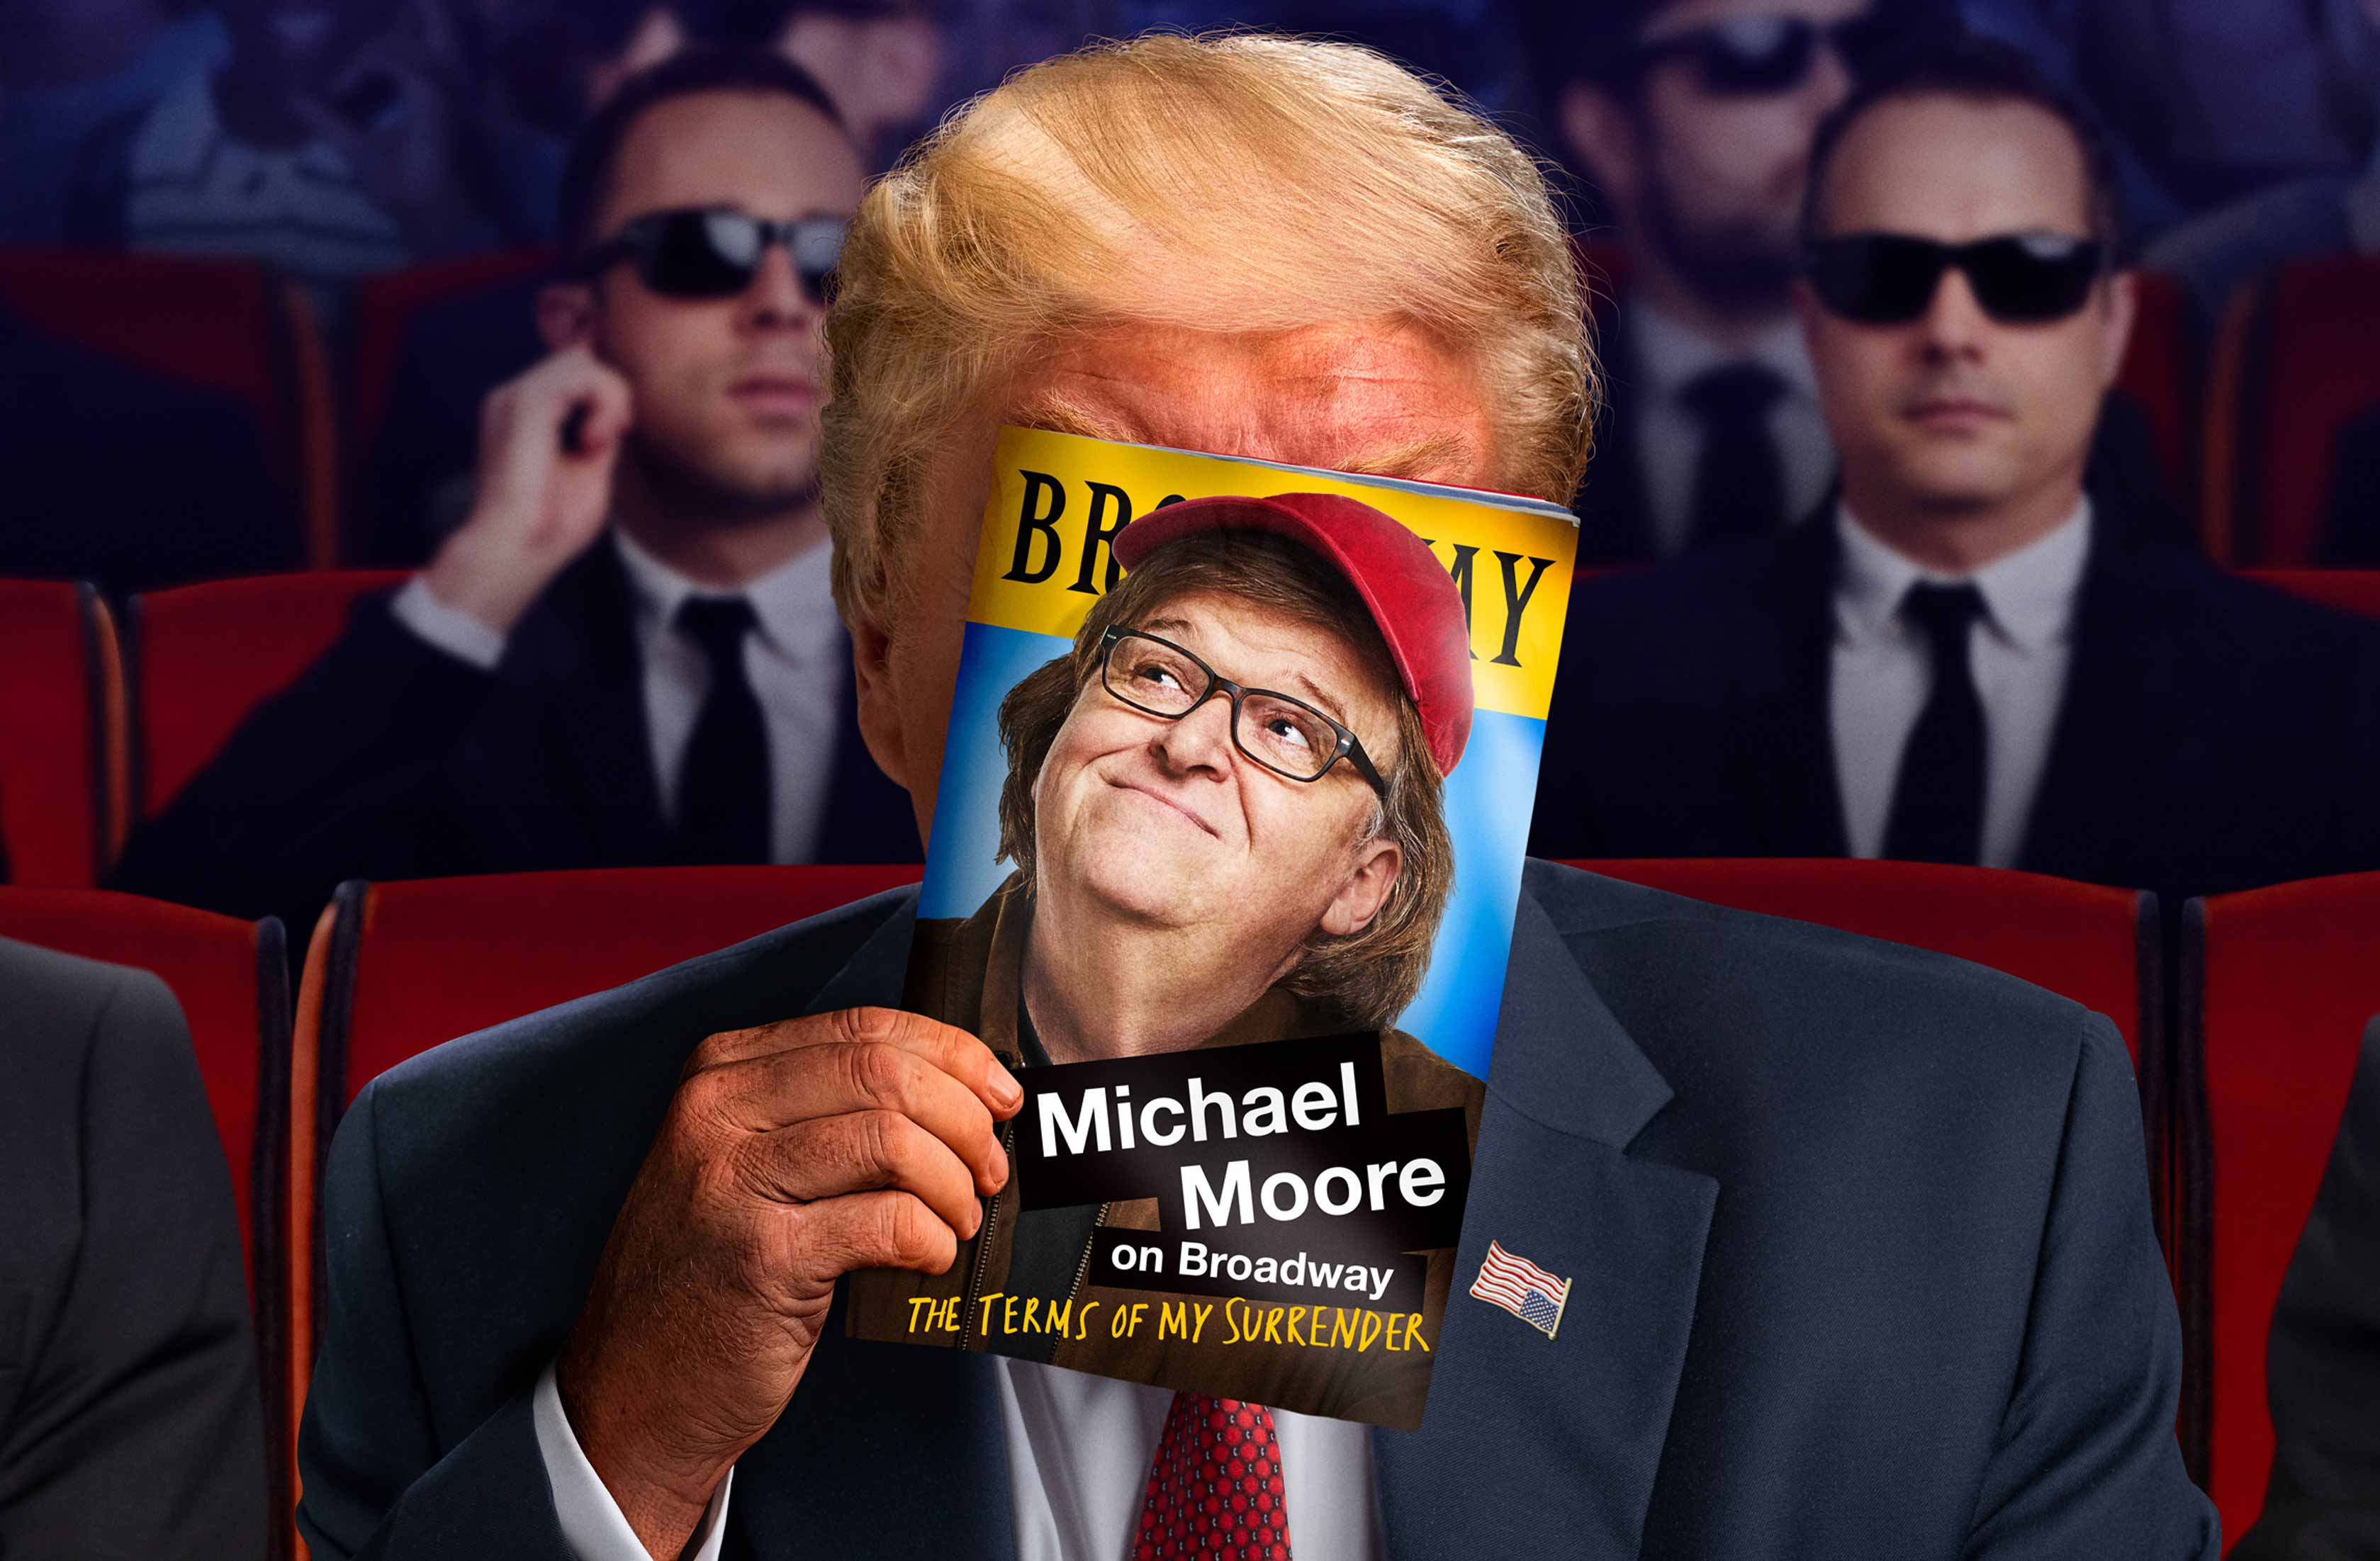 Michael-Moore-The-Terms-of-My-Surrender.jpg